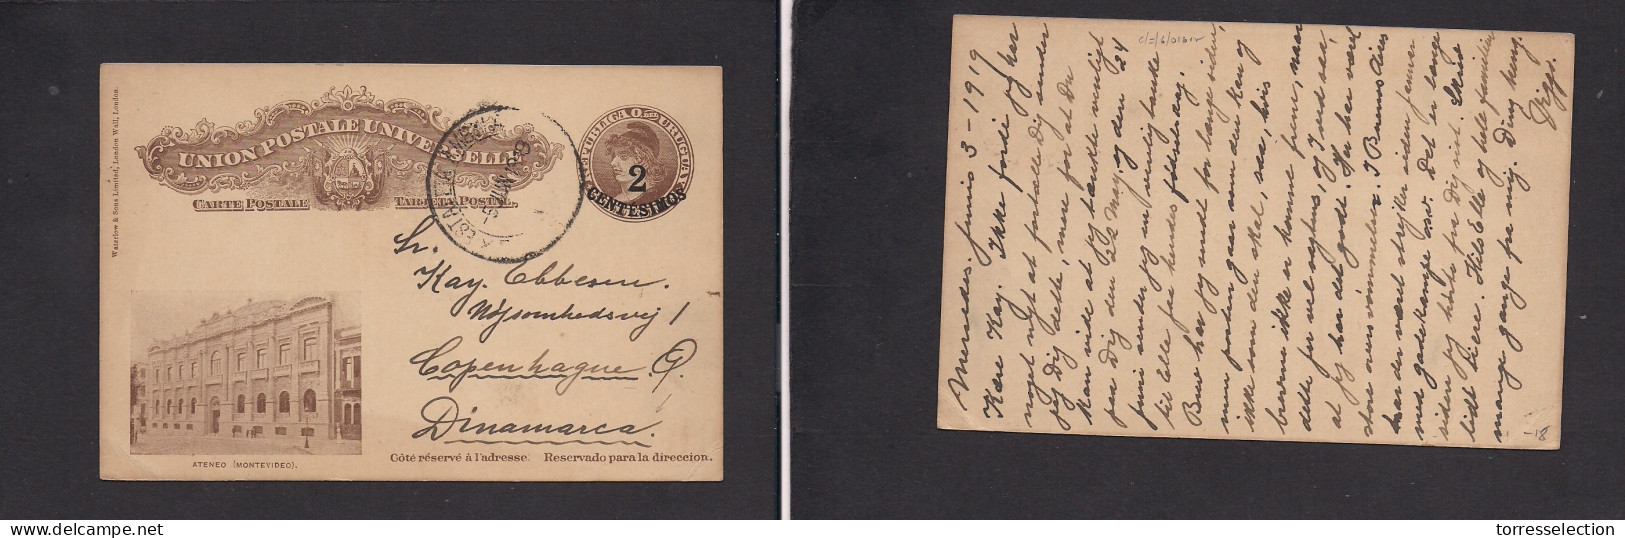 URUGUAY. 1919 (3 June) Mercedes - Denmark, Cph. 2c Ovptd Ateneo Stat Card. Fine Used. XSALE. - Uruguay